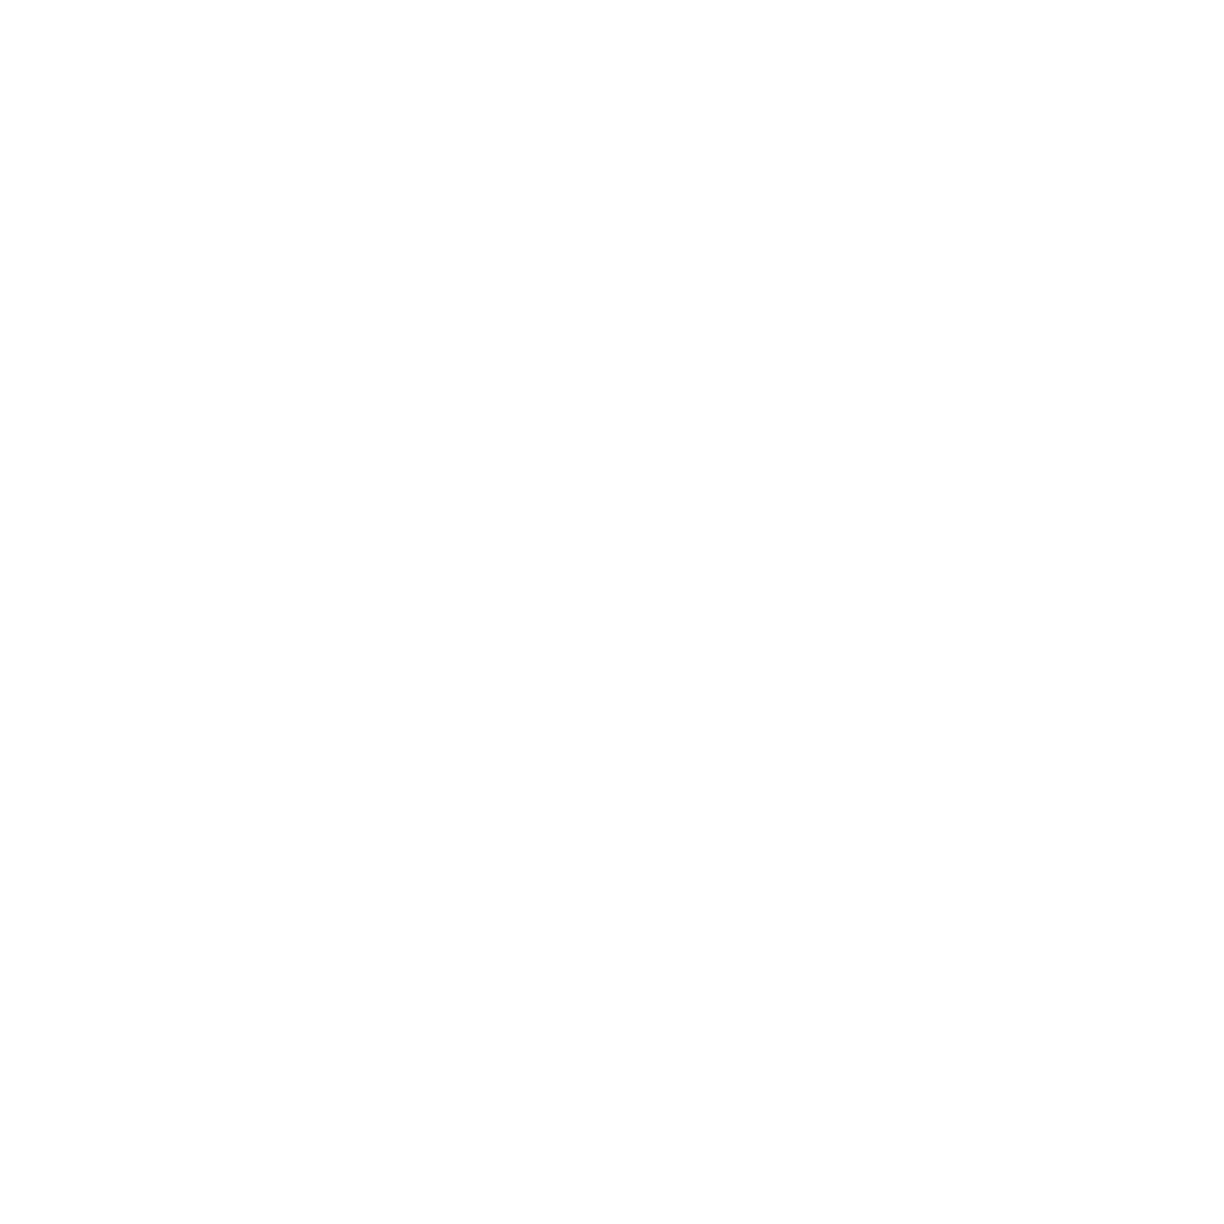 Silverlake Sessions